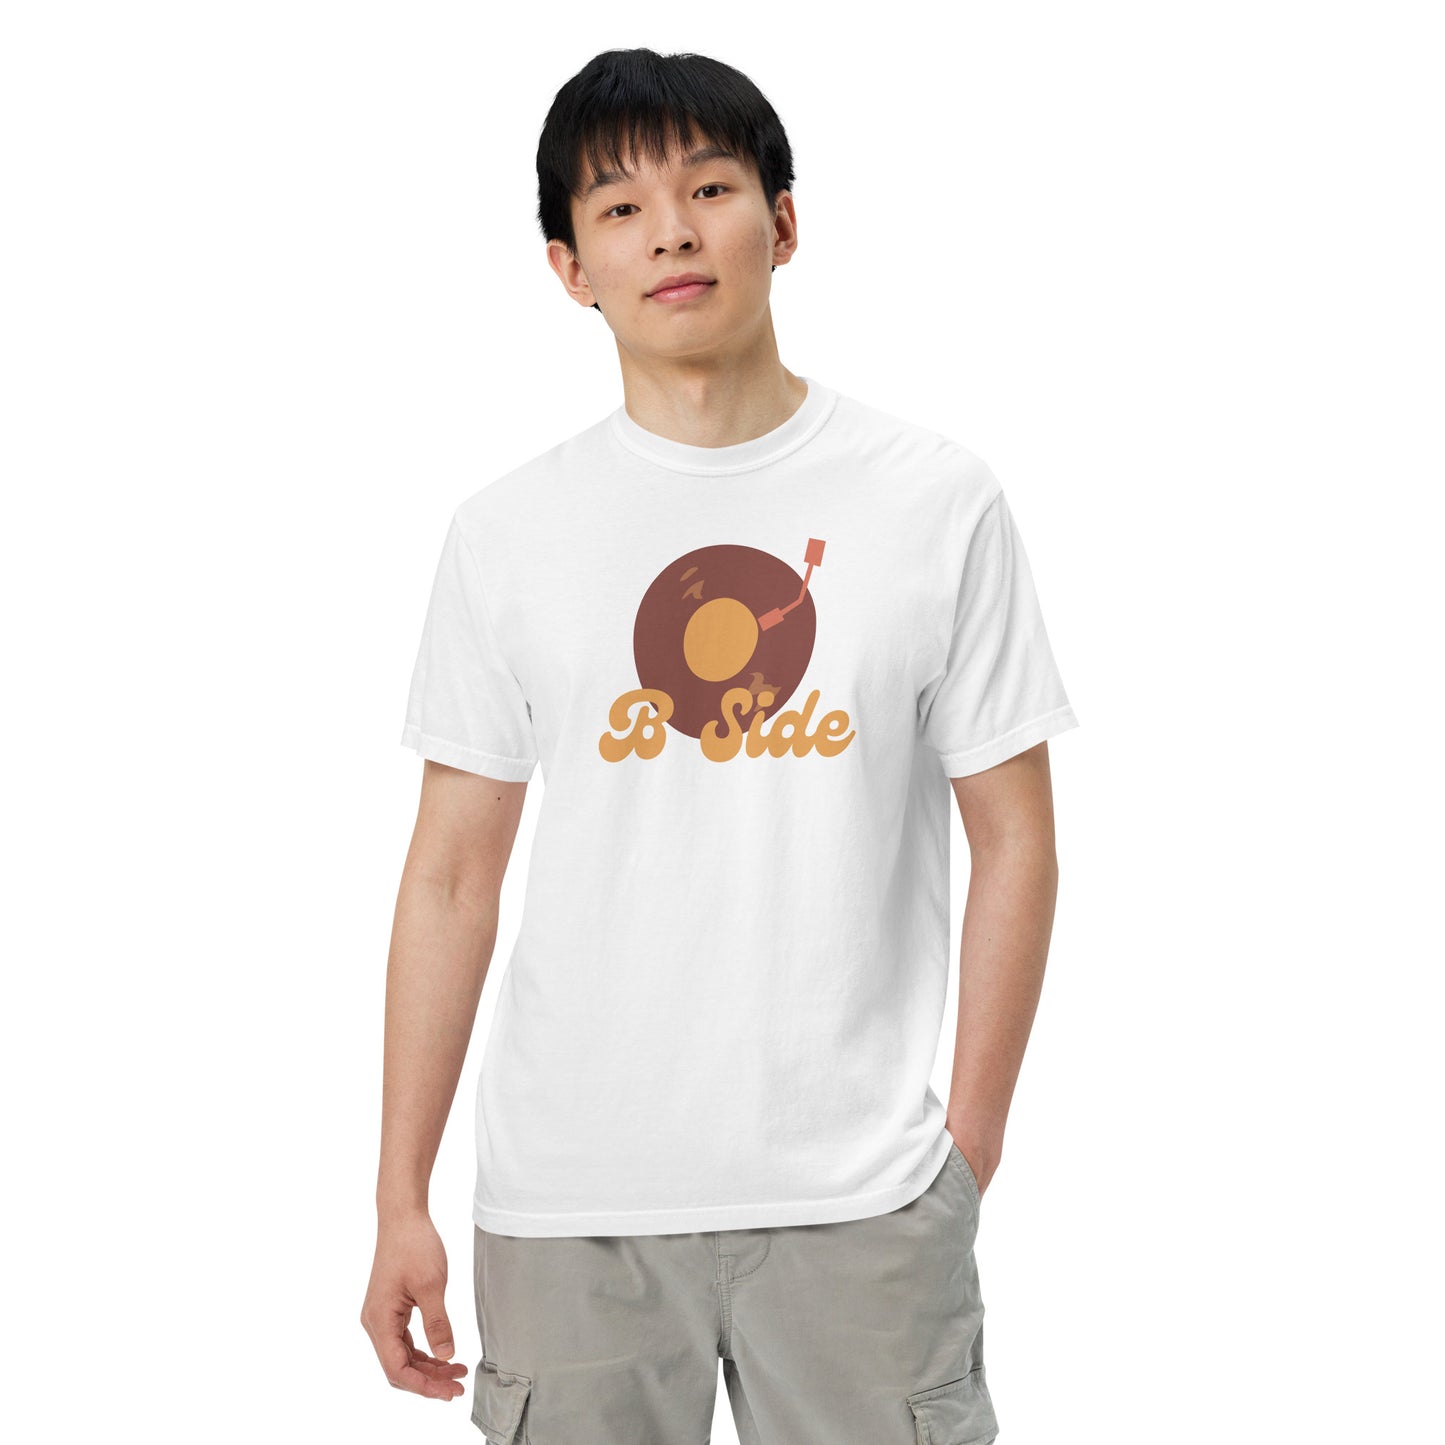 B Side Men’s Comfort Colors T-Shirt